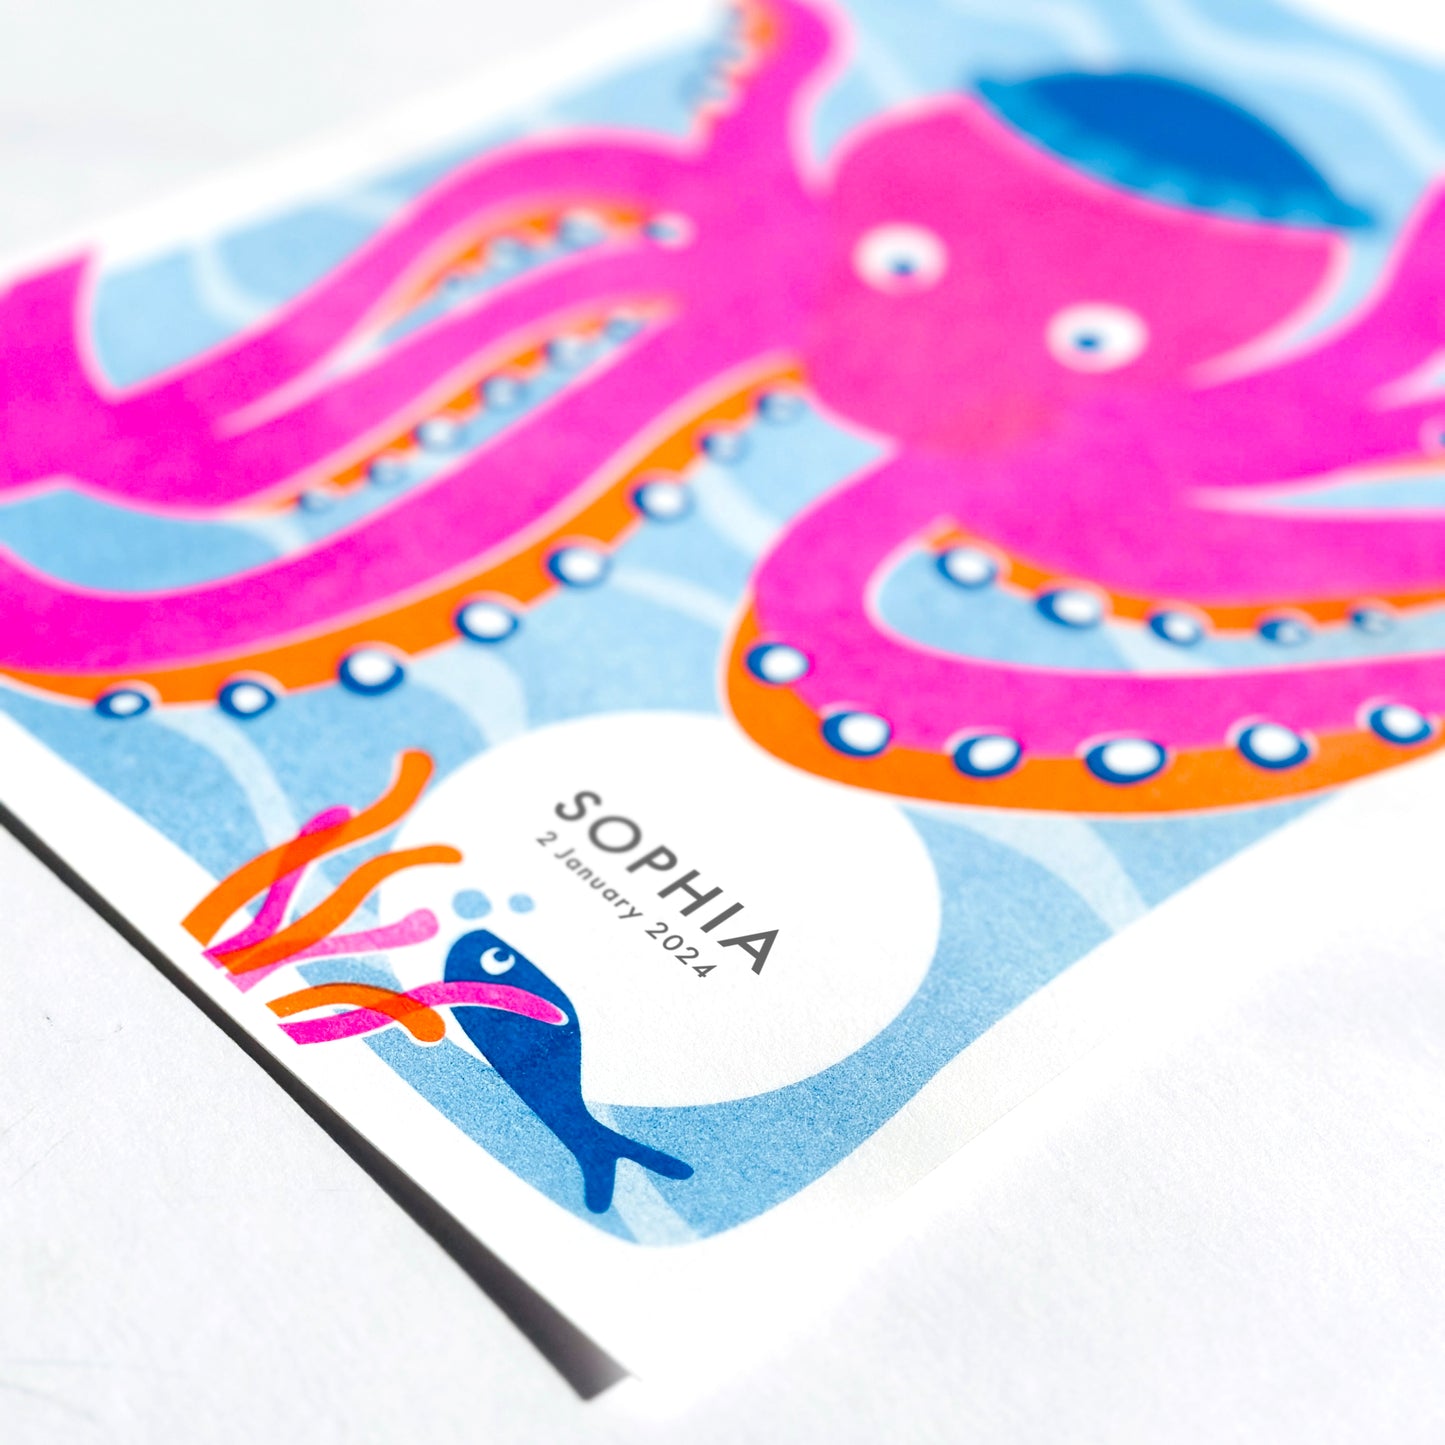 Personalised Octopus riso print